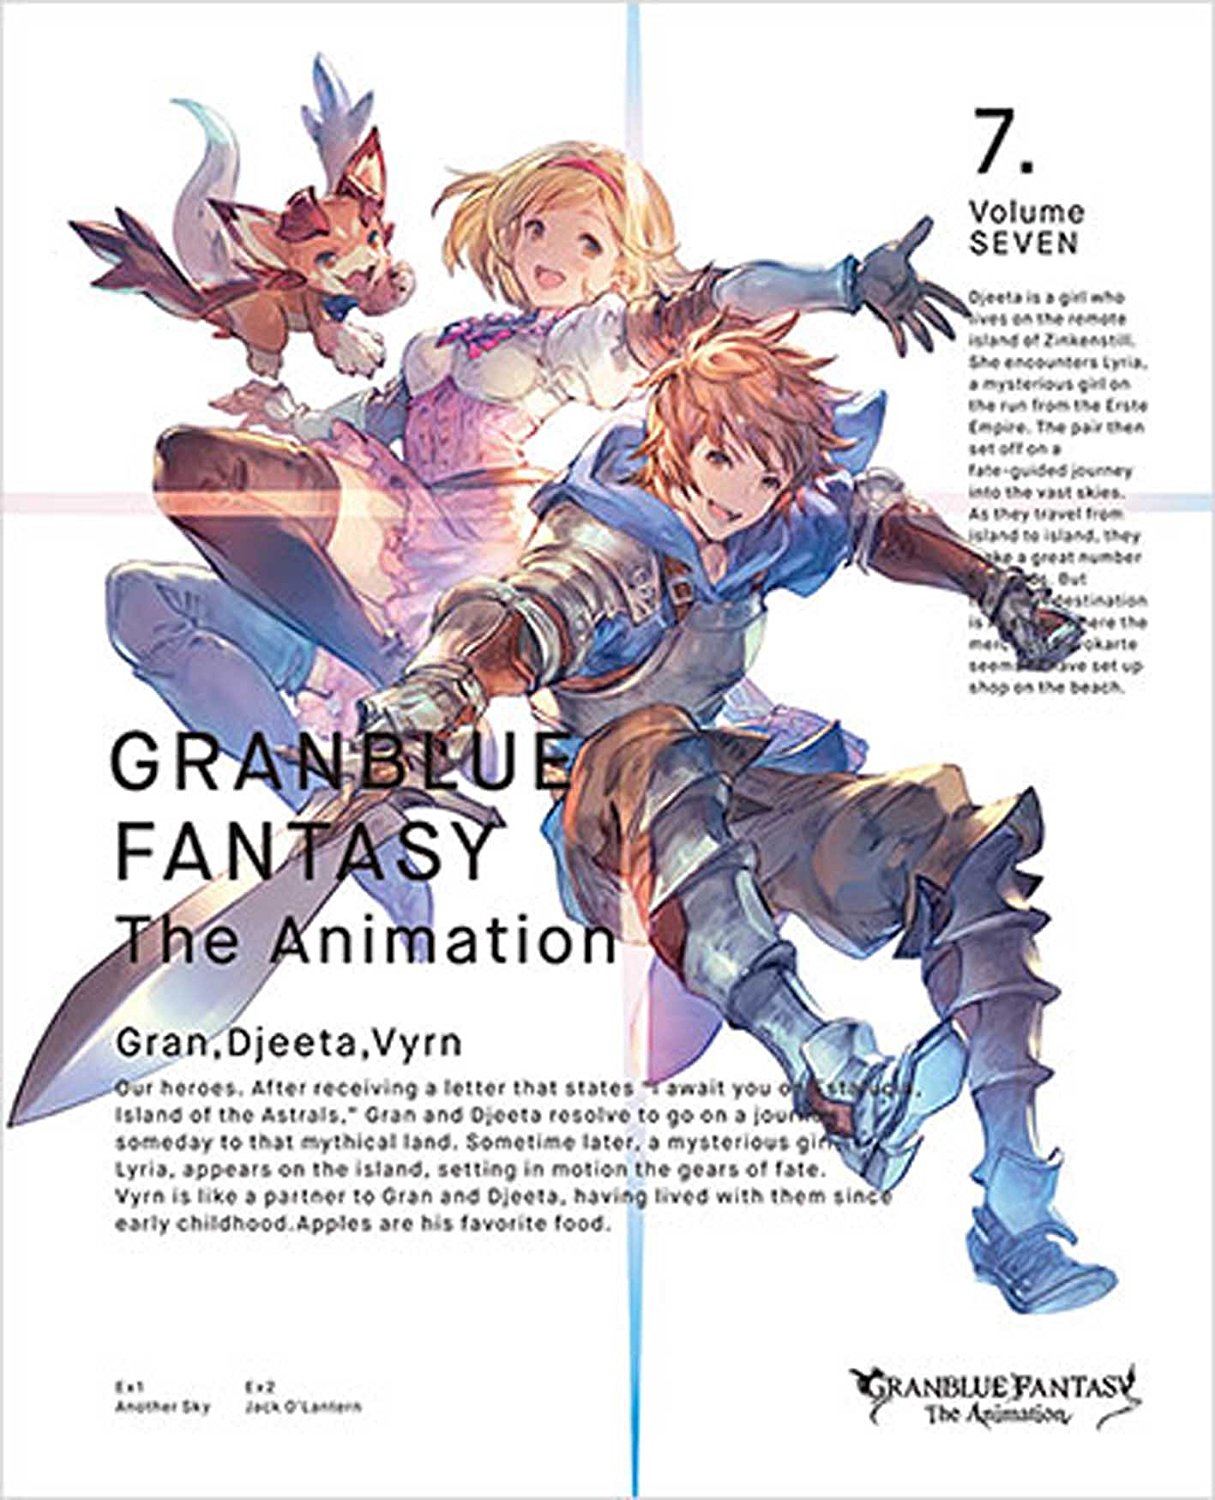 Granblue Fantasy: The Animation Season 1 - streaming online